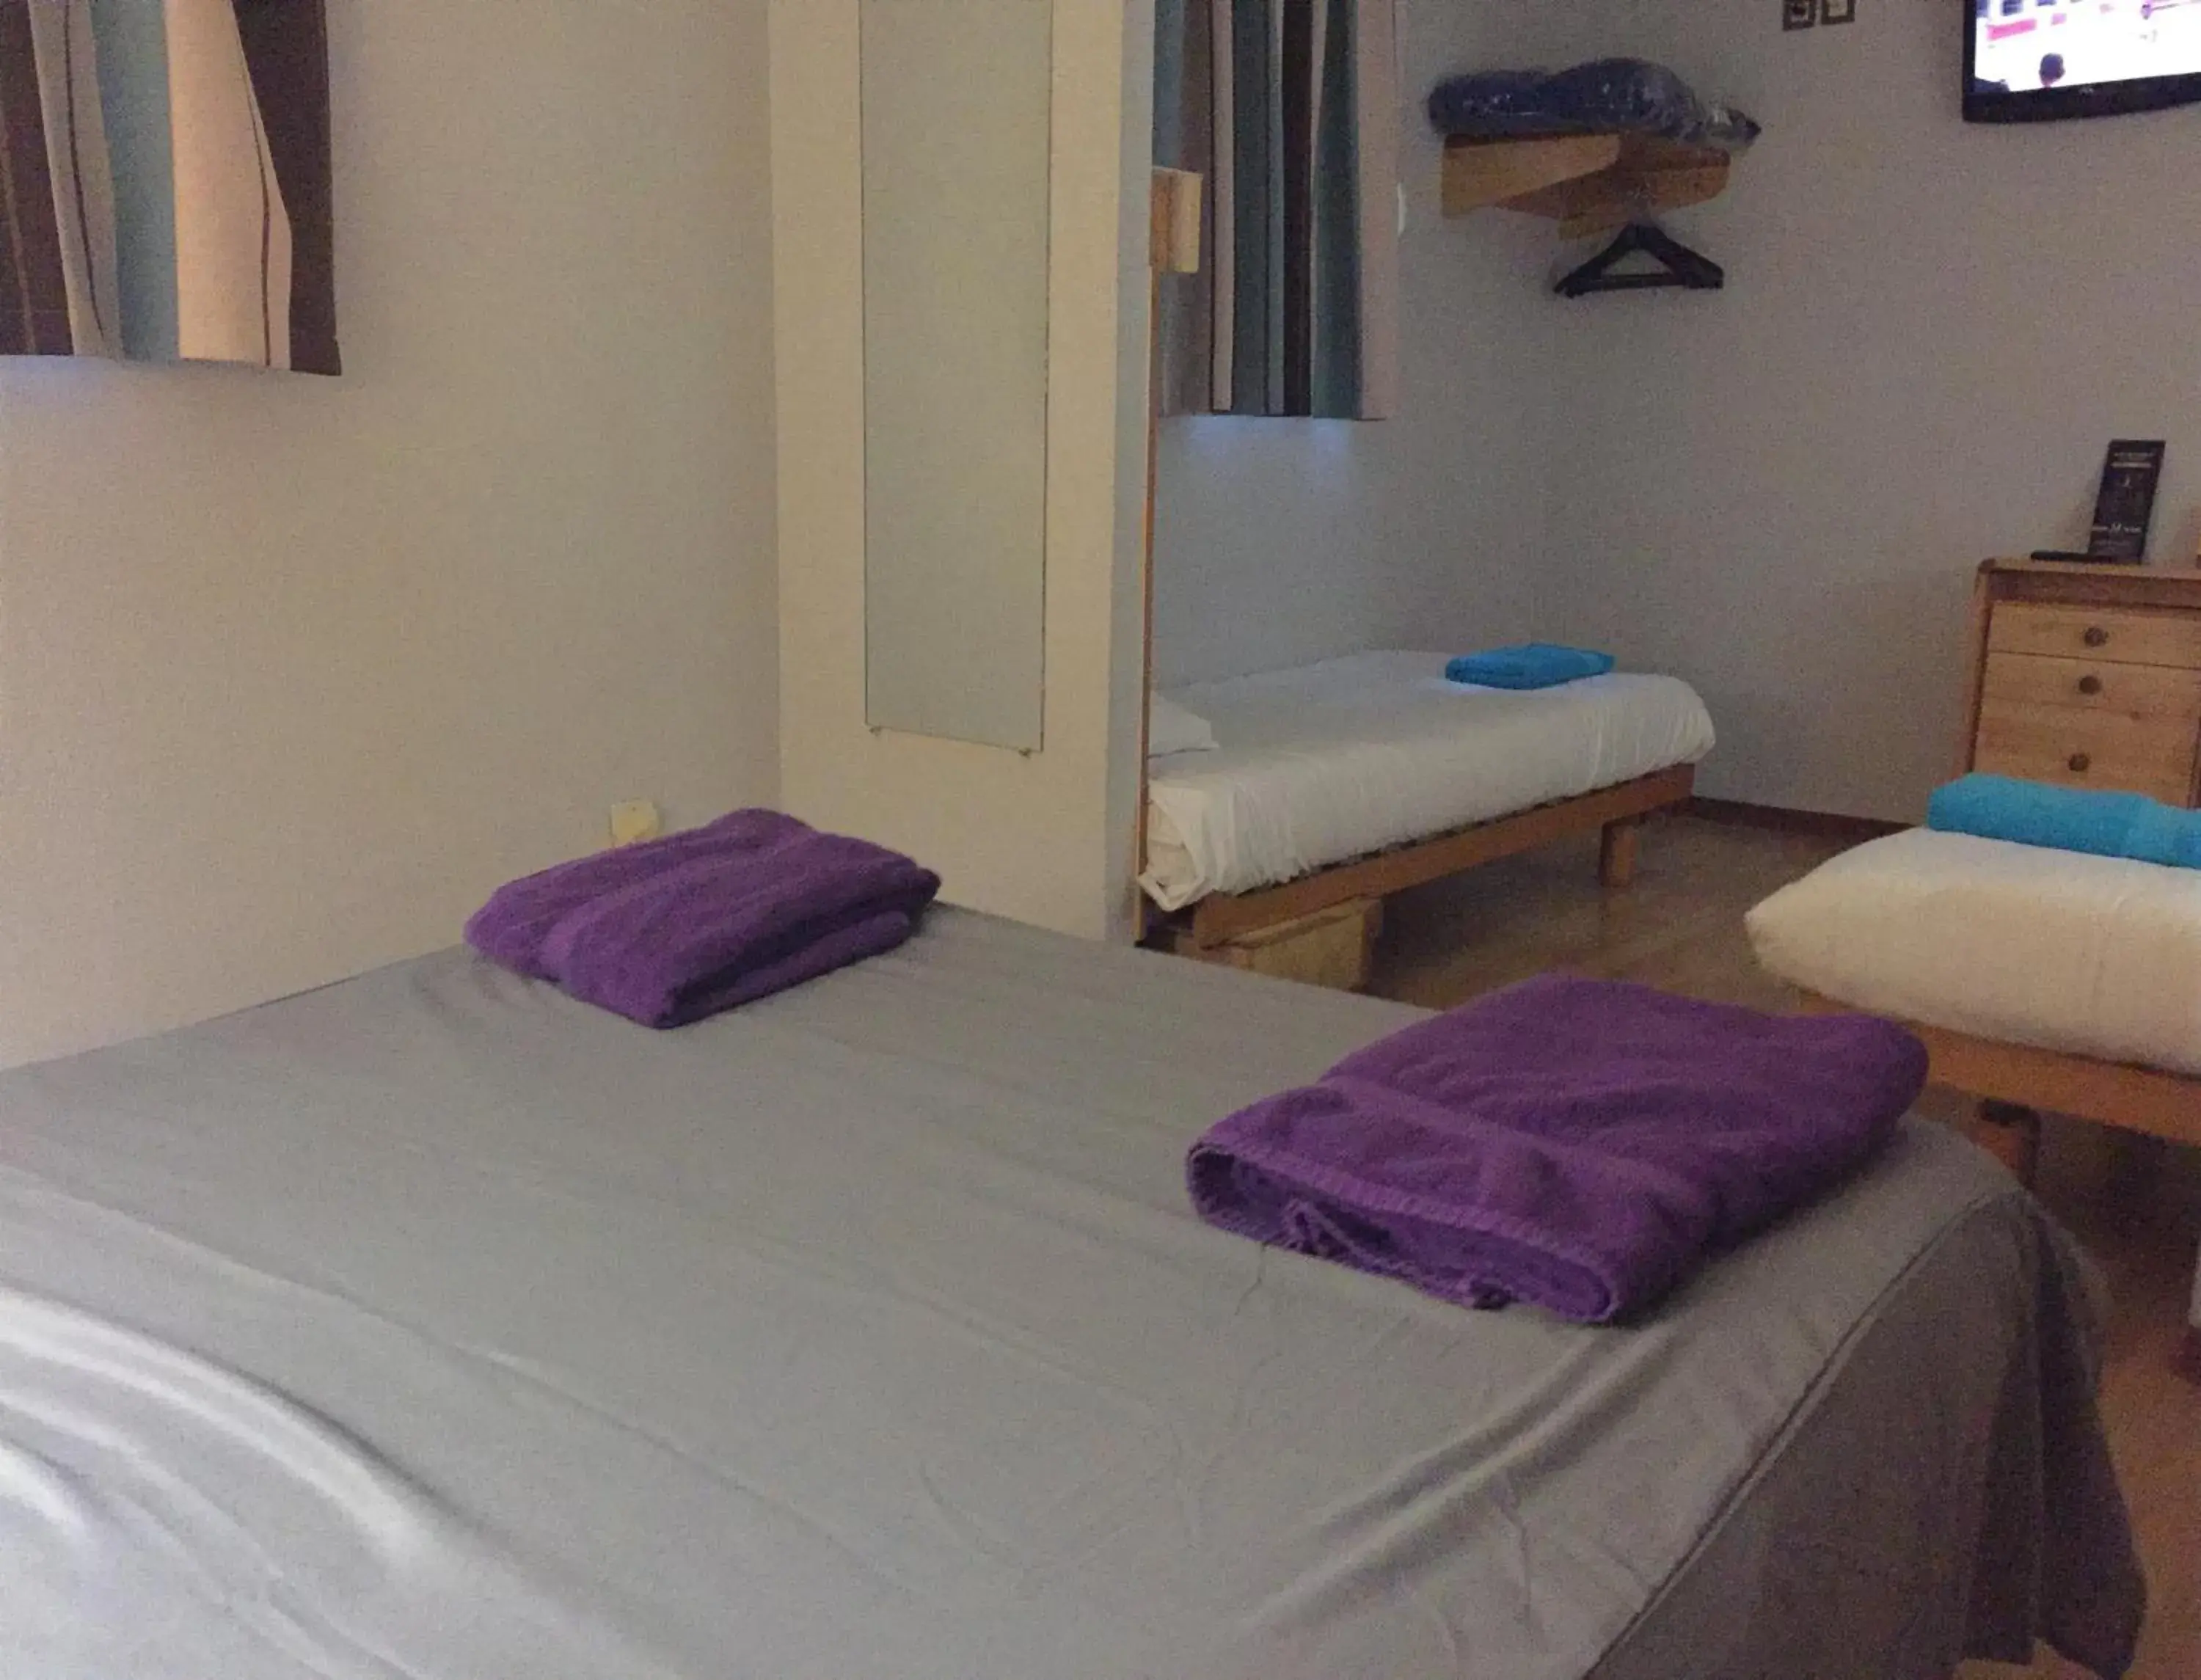 Bed, Room Photo in The Originals Access, Hotel Beziers Est (P'tit Dej-Hotel)